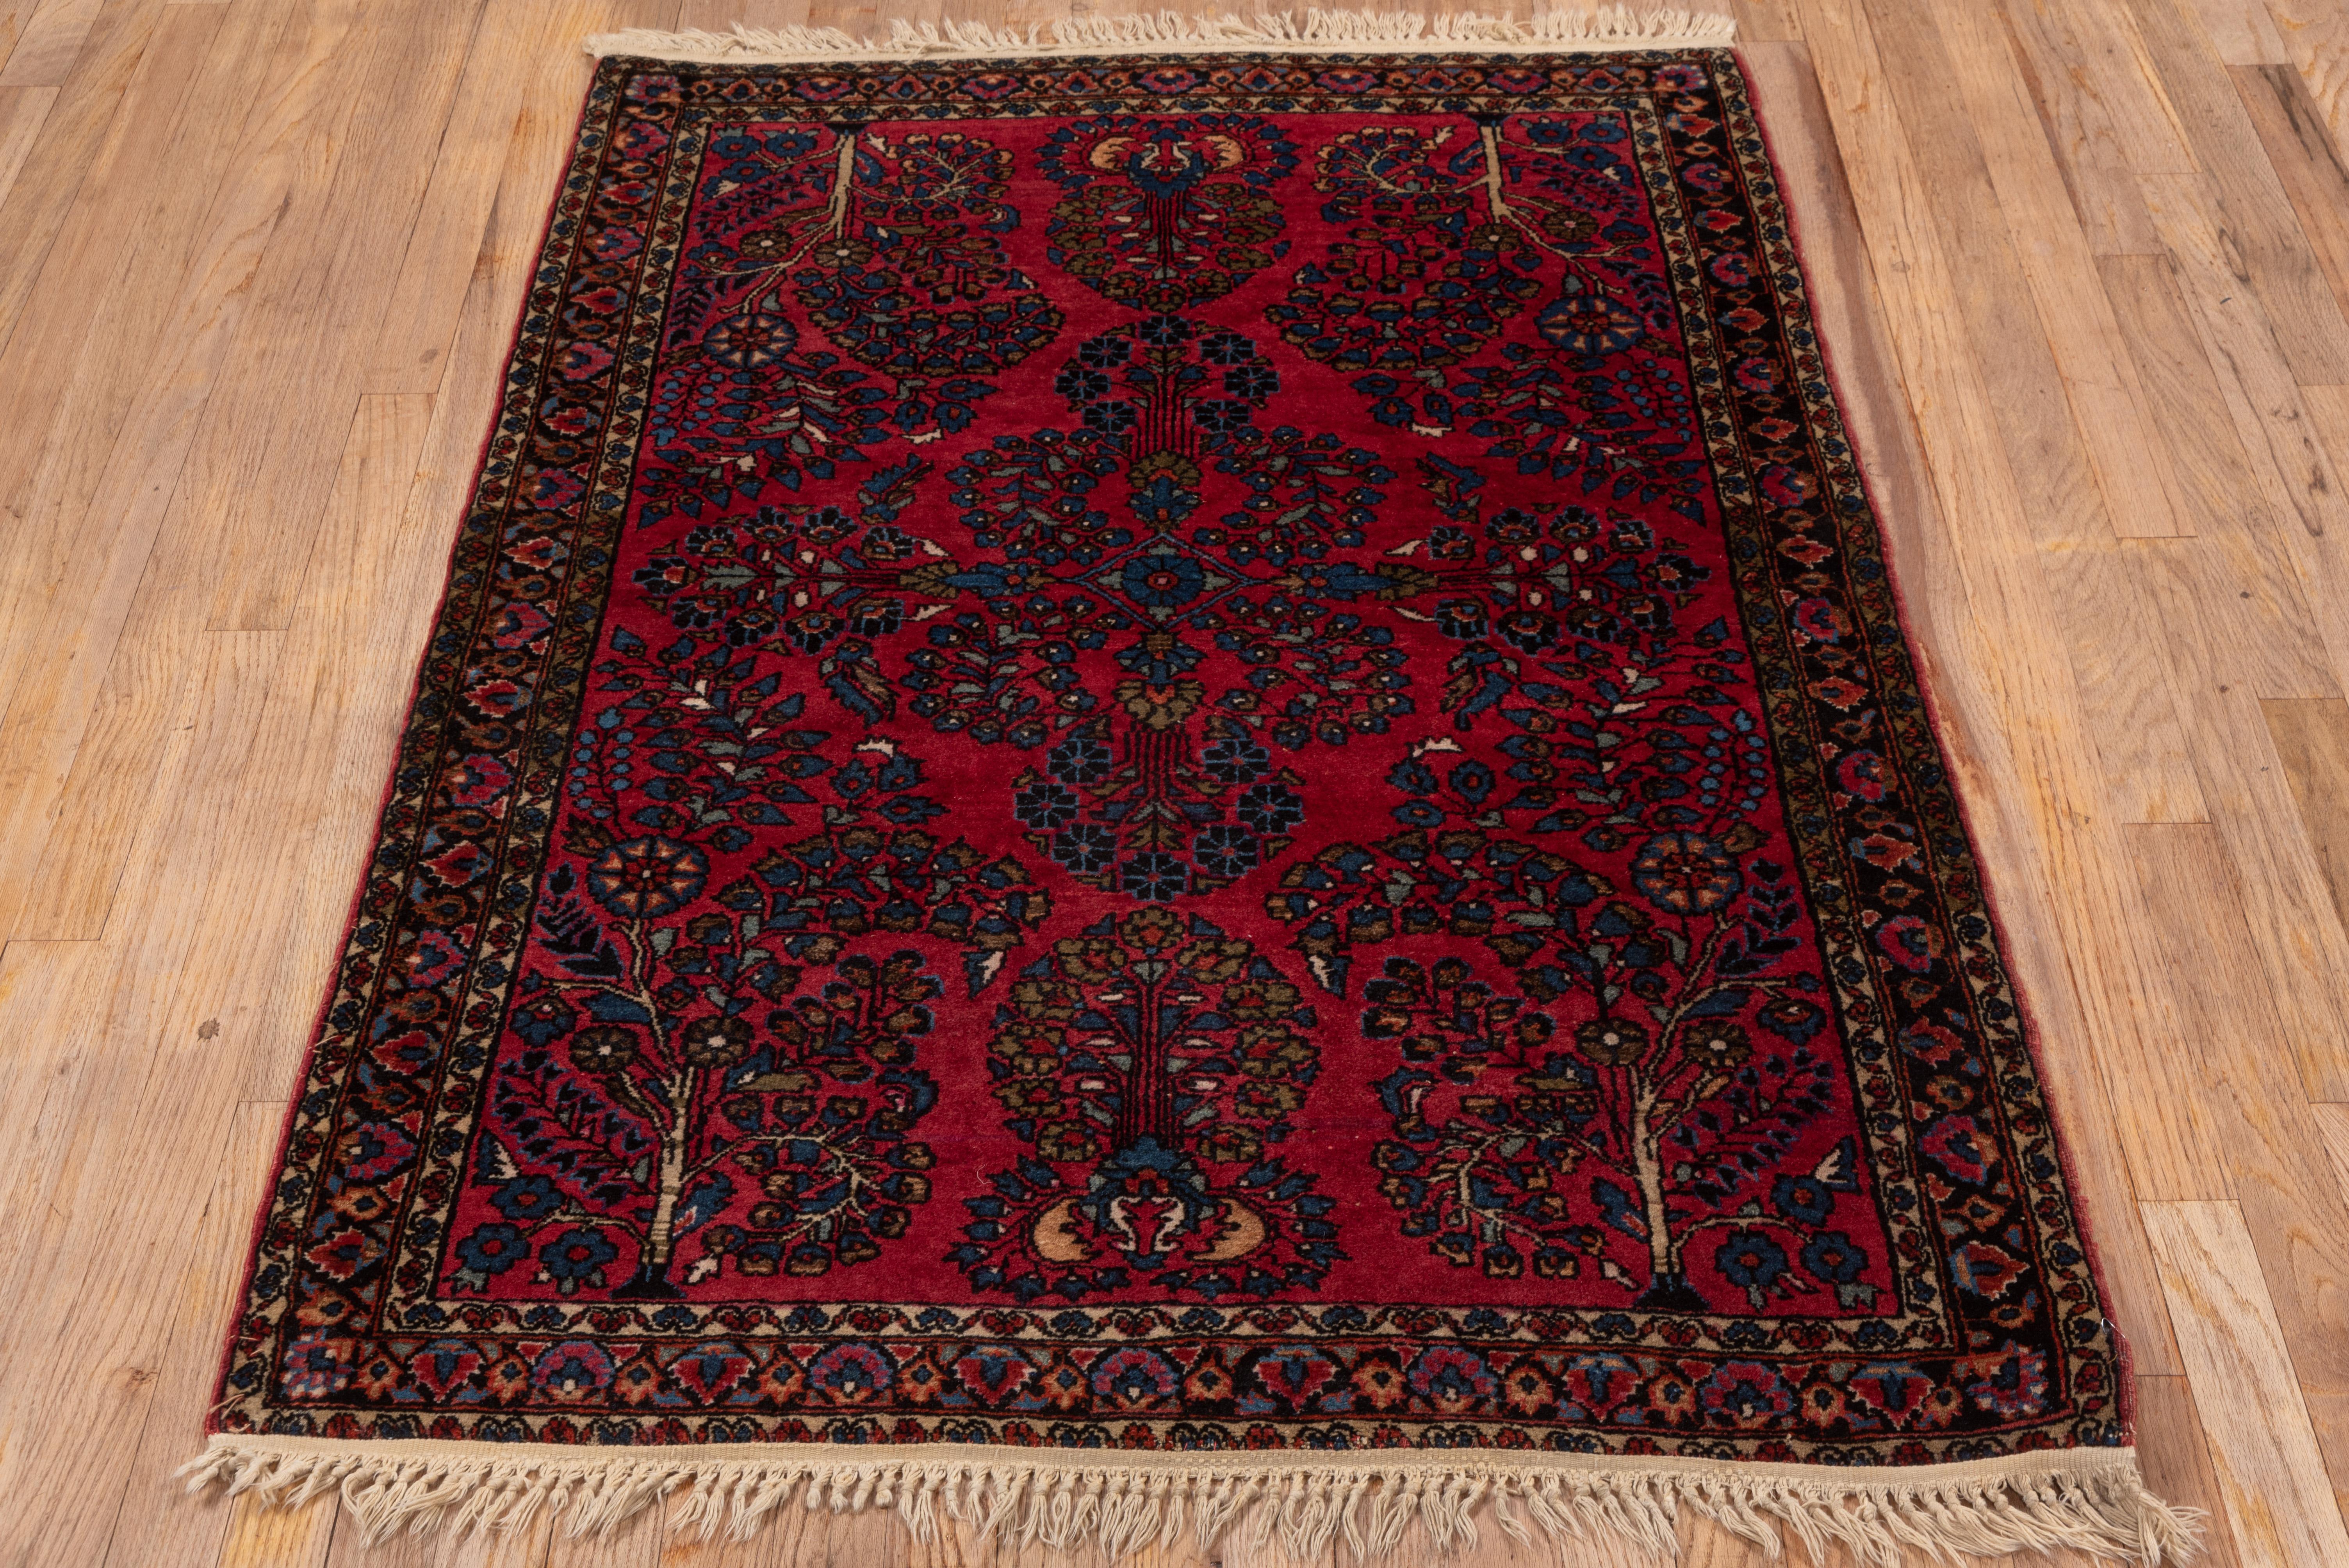 Sarouk Farahan Mid-20th Century Persian Sarouk Rug, Red Field, Medium Pile, Blue Acents For Sale